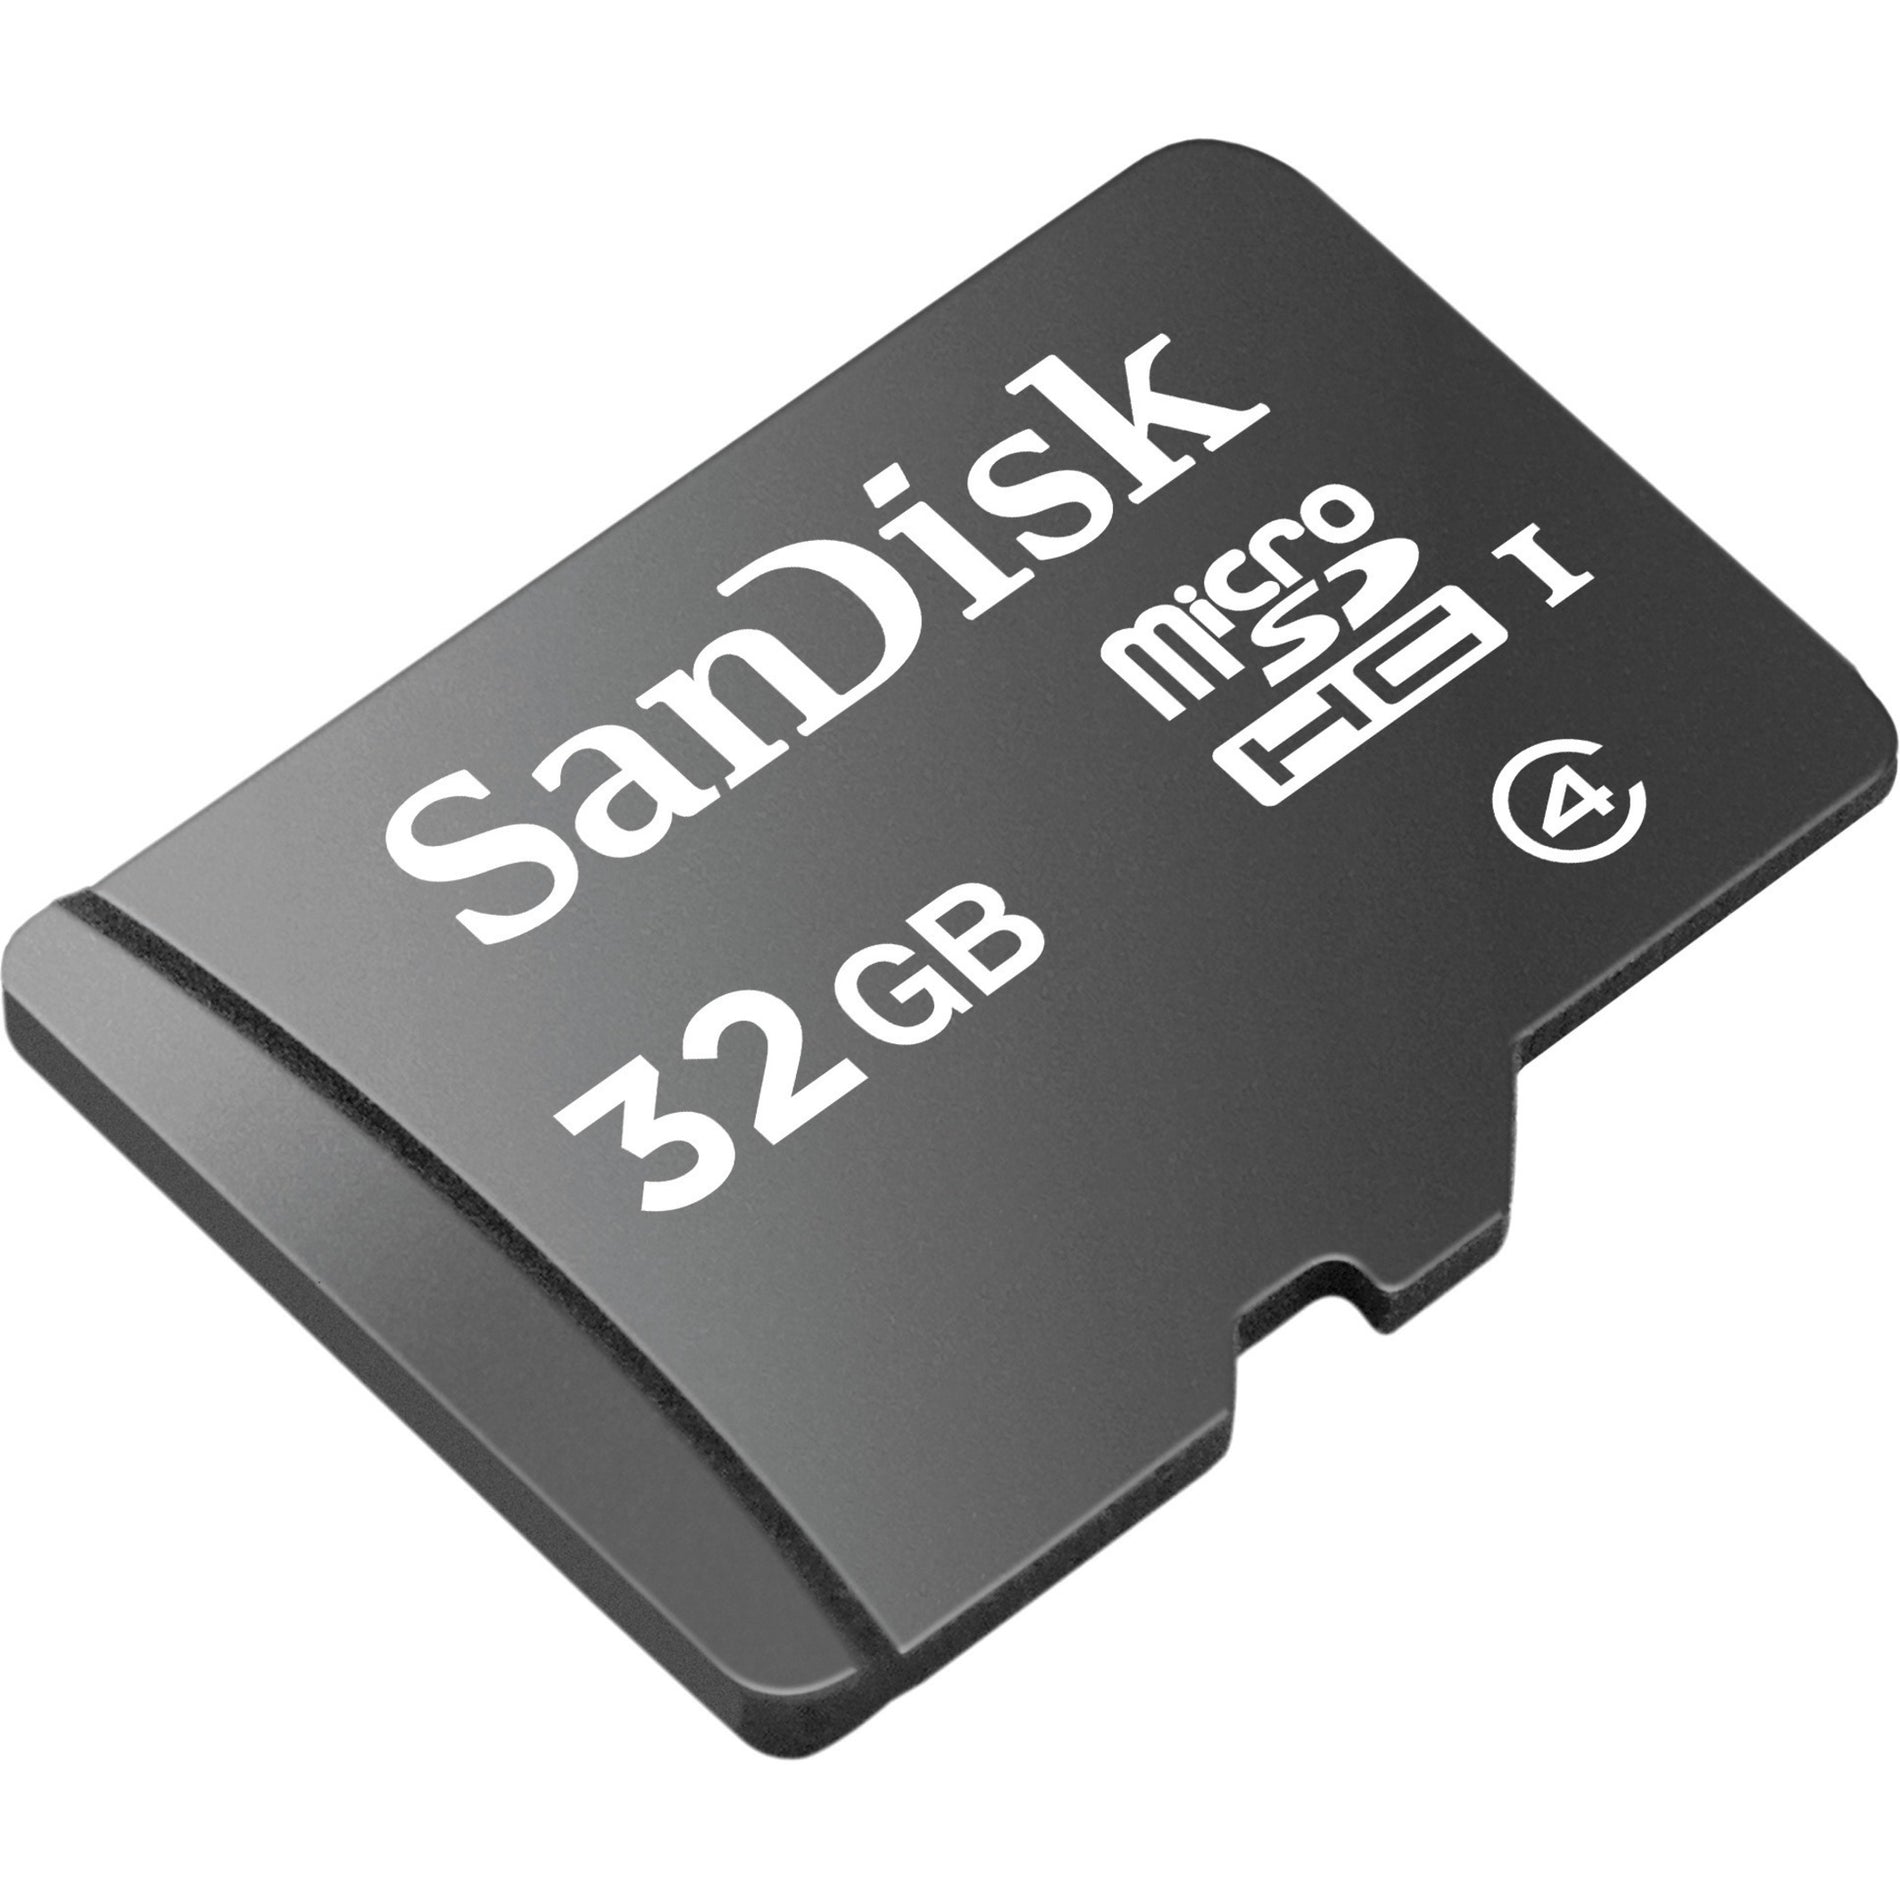 SanDisk SDSDQ-032G-A46 microSDHC Memory Card, 32GB Class 4 - 5 Year Warranty